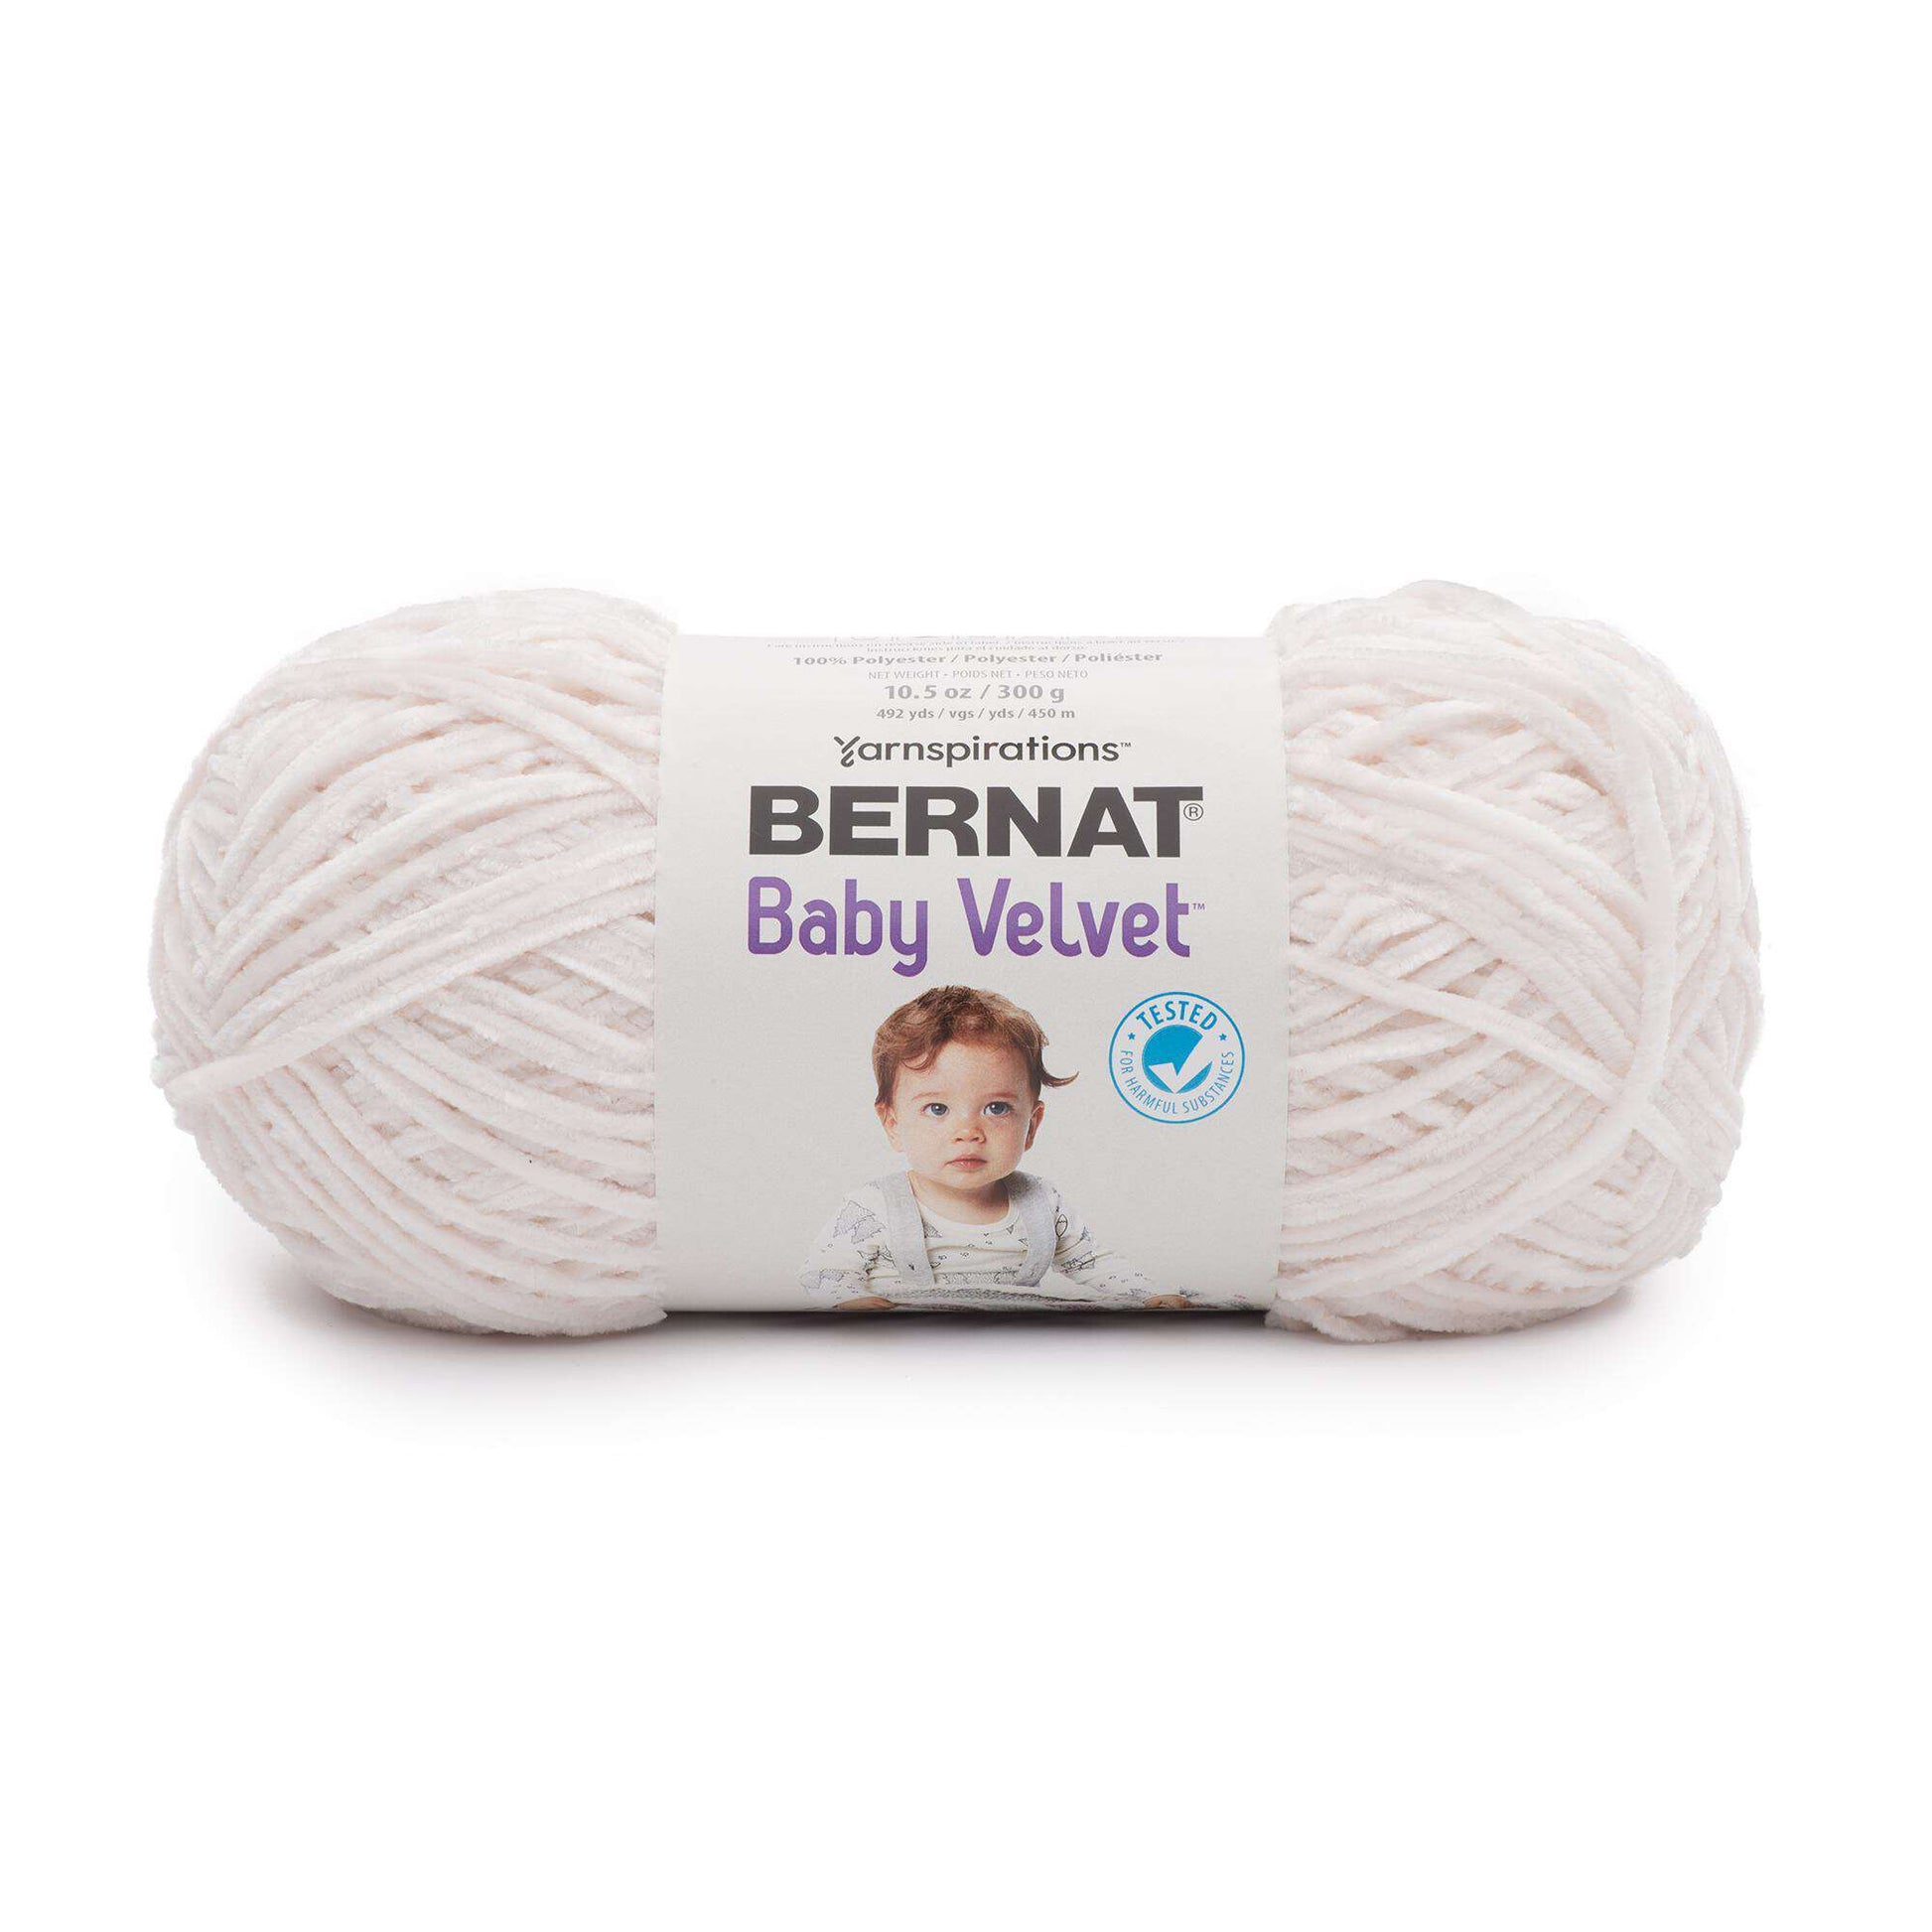 Bernat Baby Velvet Yarn - 3.5 oz, Pale Gray - 3 Pack Bundle with Bella's Crafts Stitch Markers